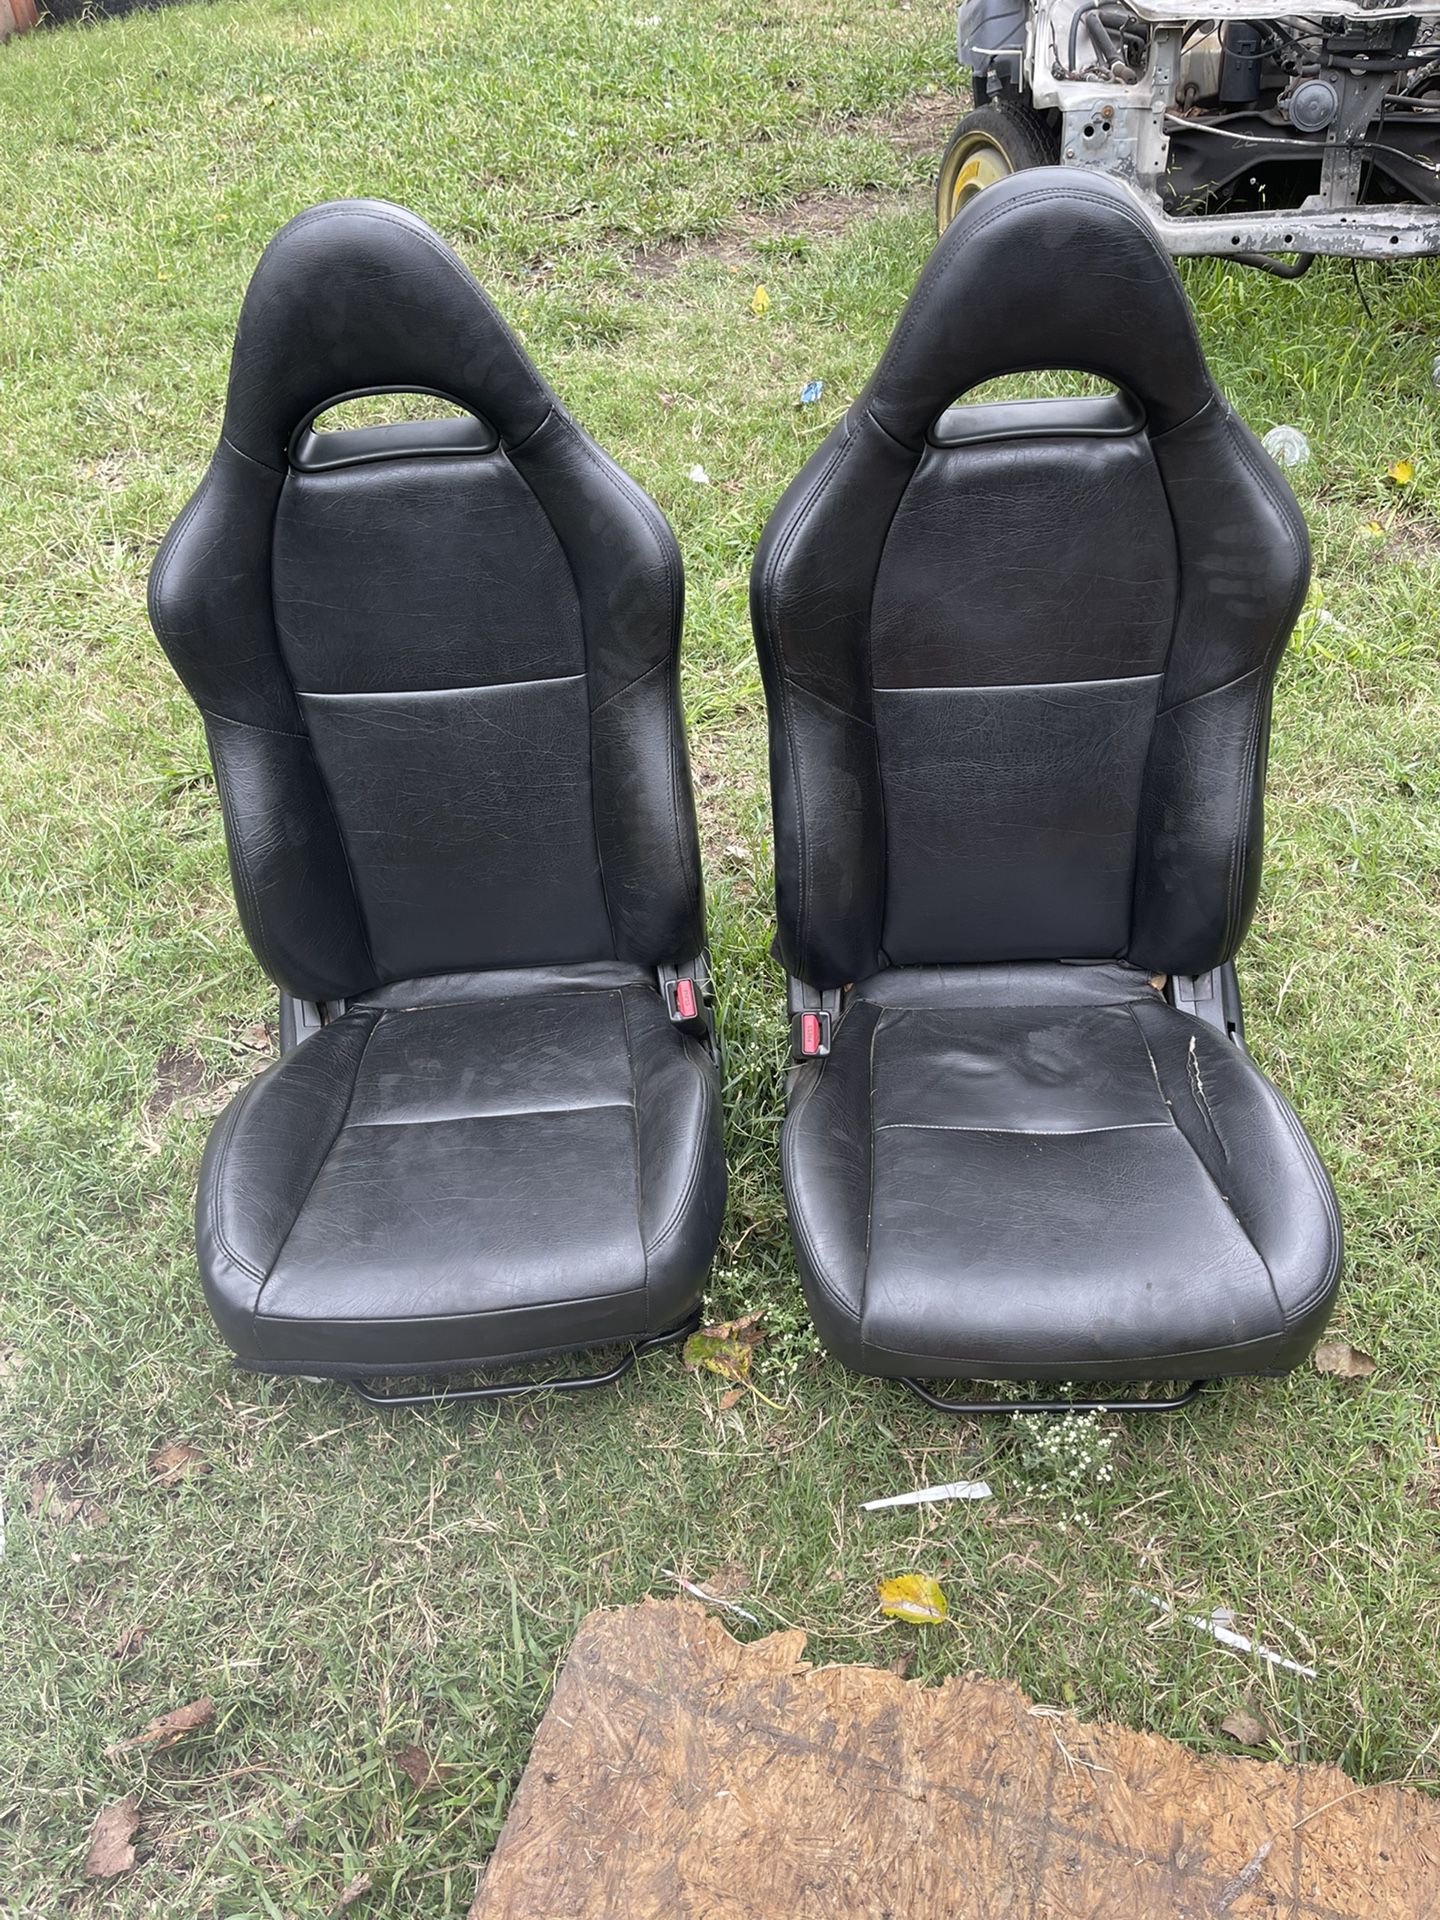 Rsx Type S Seats